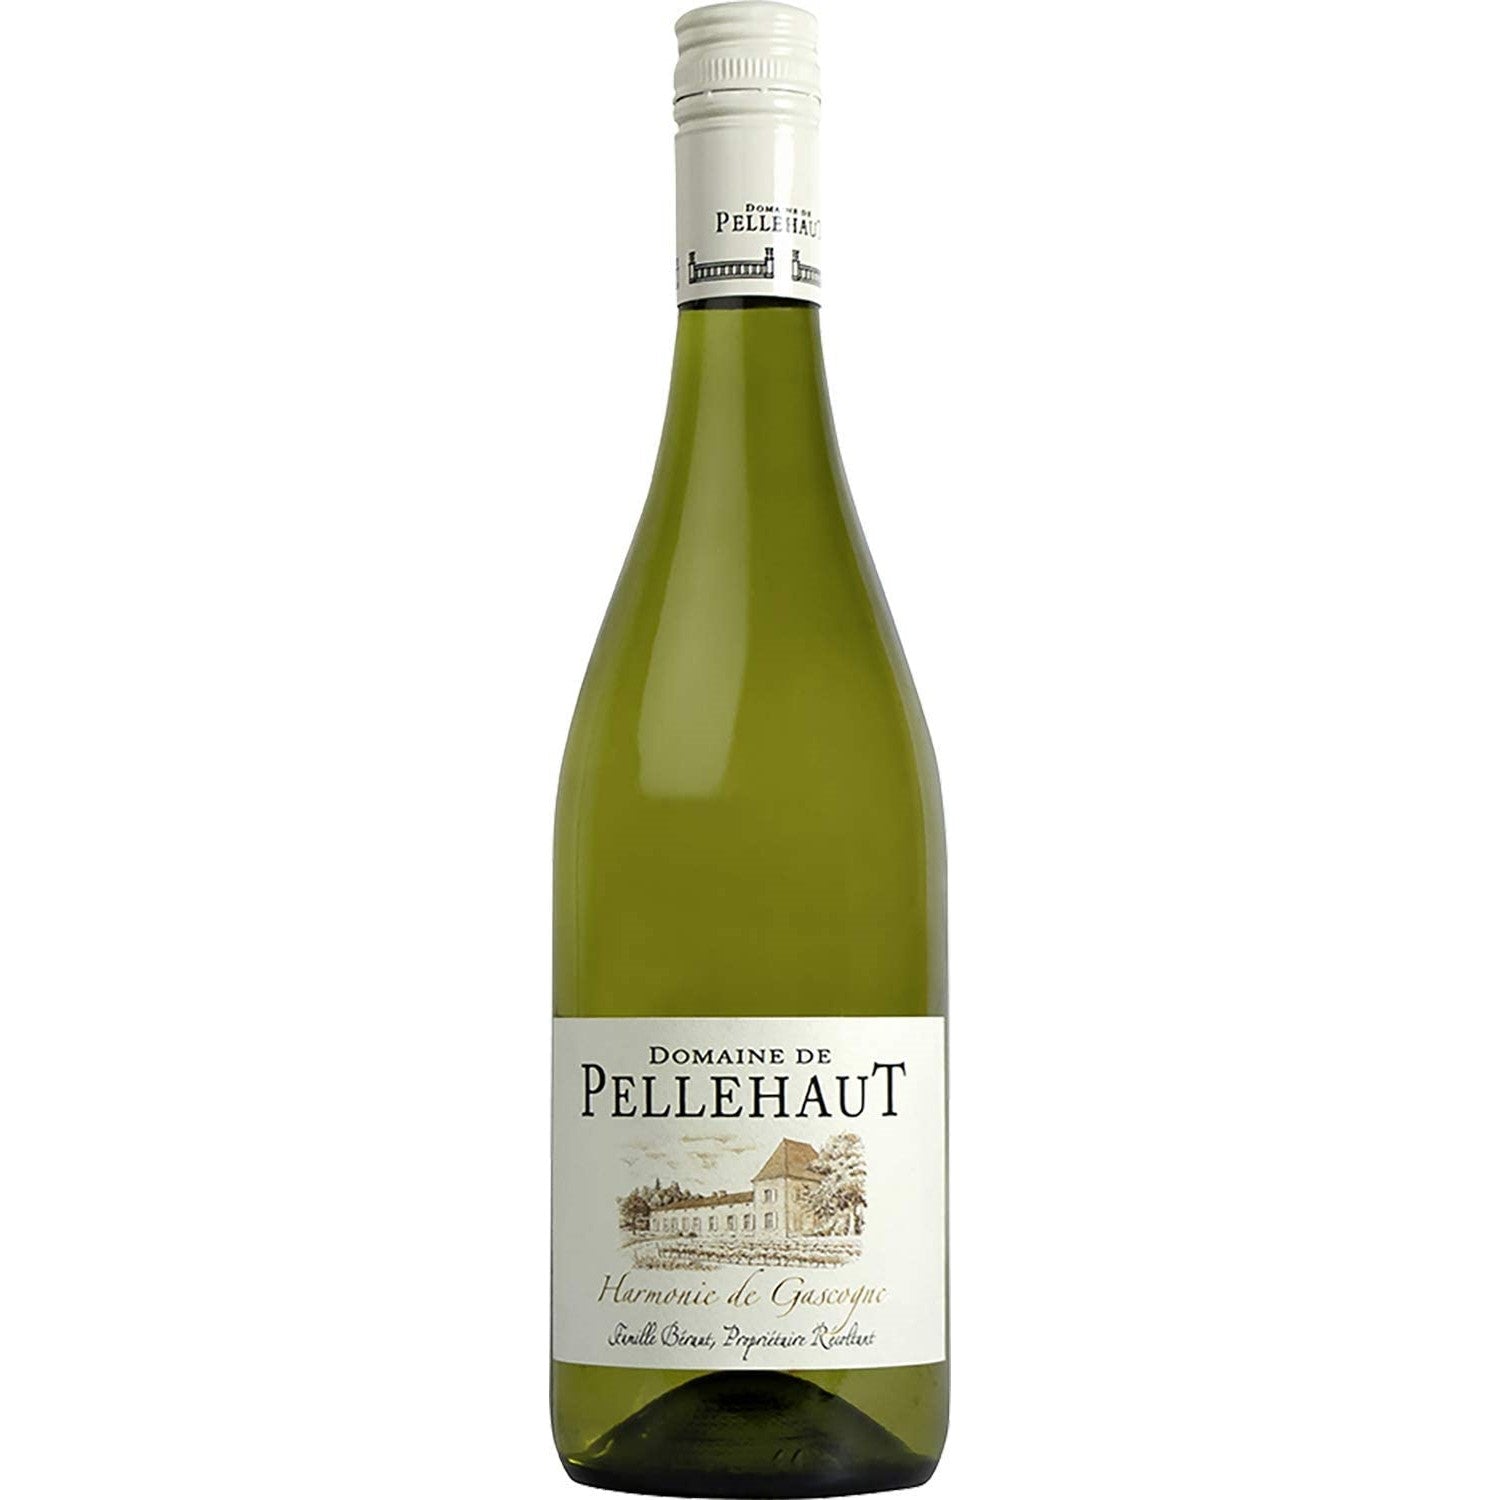 Domaine de Pellehaut Harmonie de Gascogne Blanc Weißwein trocken IGP Frankreich (6 x 0.75l) - Versanel -